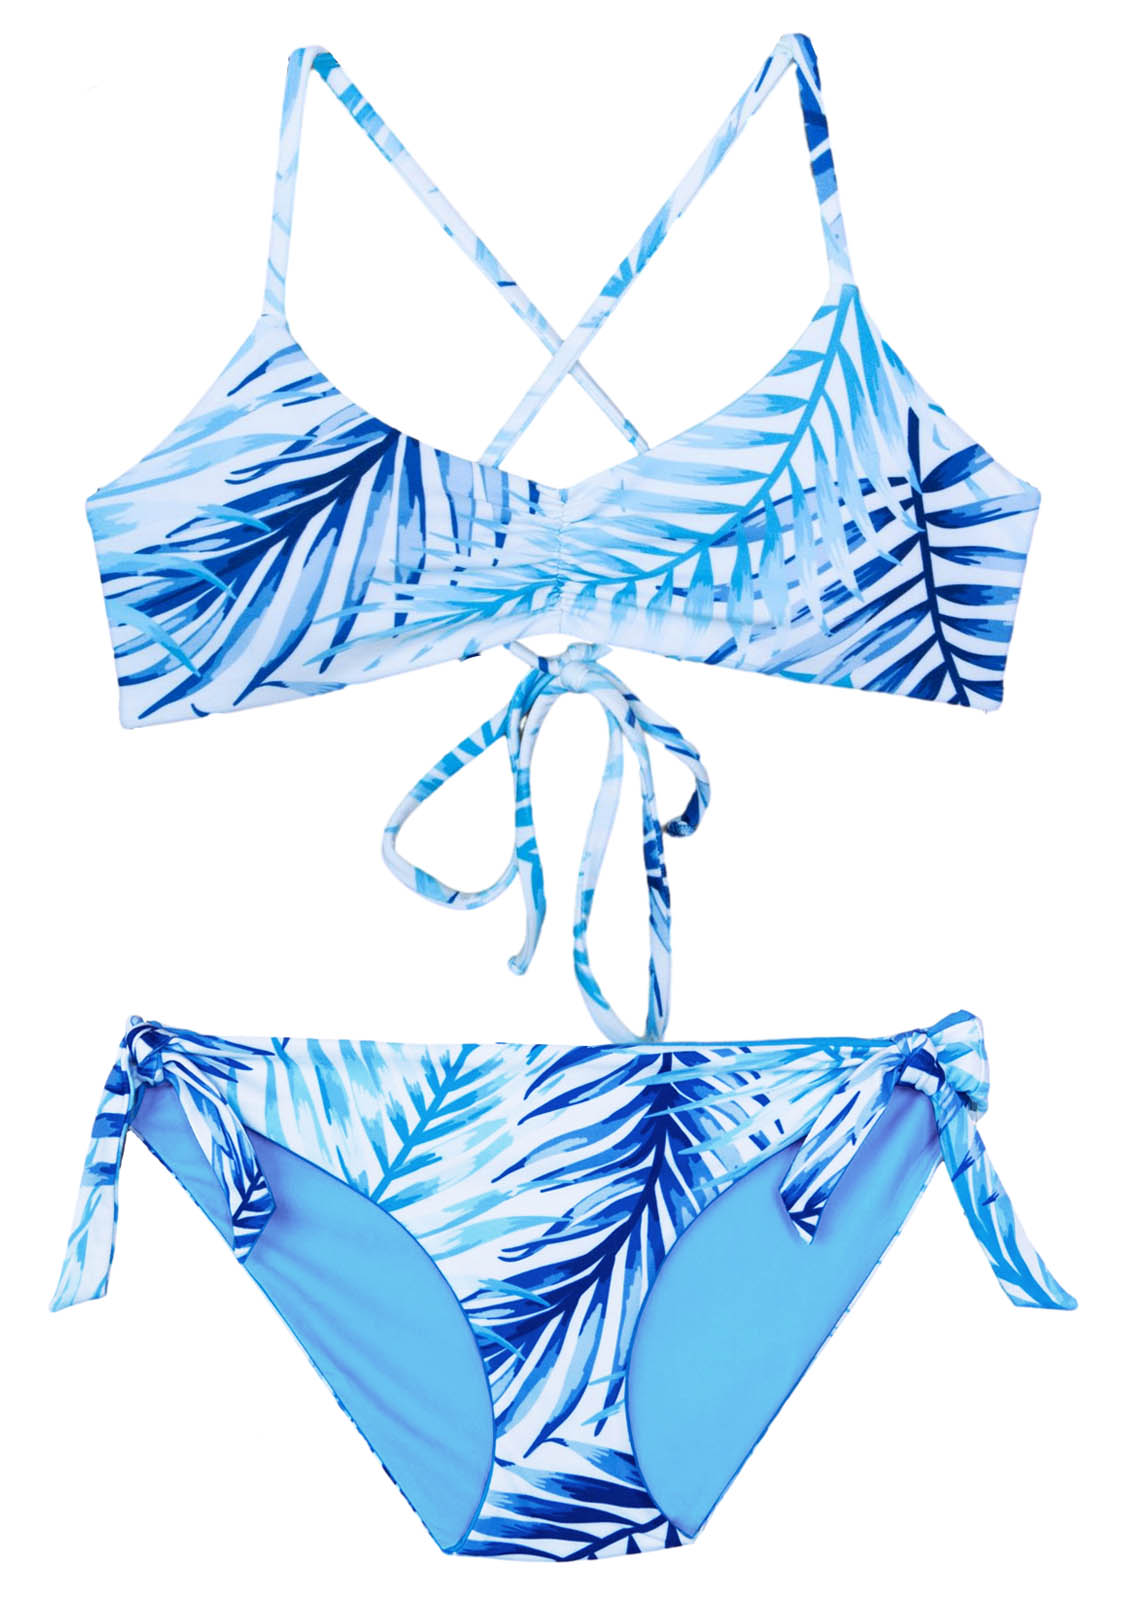 A blue and white tropical bikini designed by Teen Brand Chance Loves Swimwear